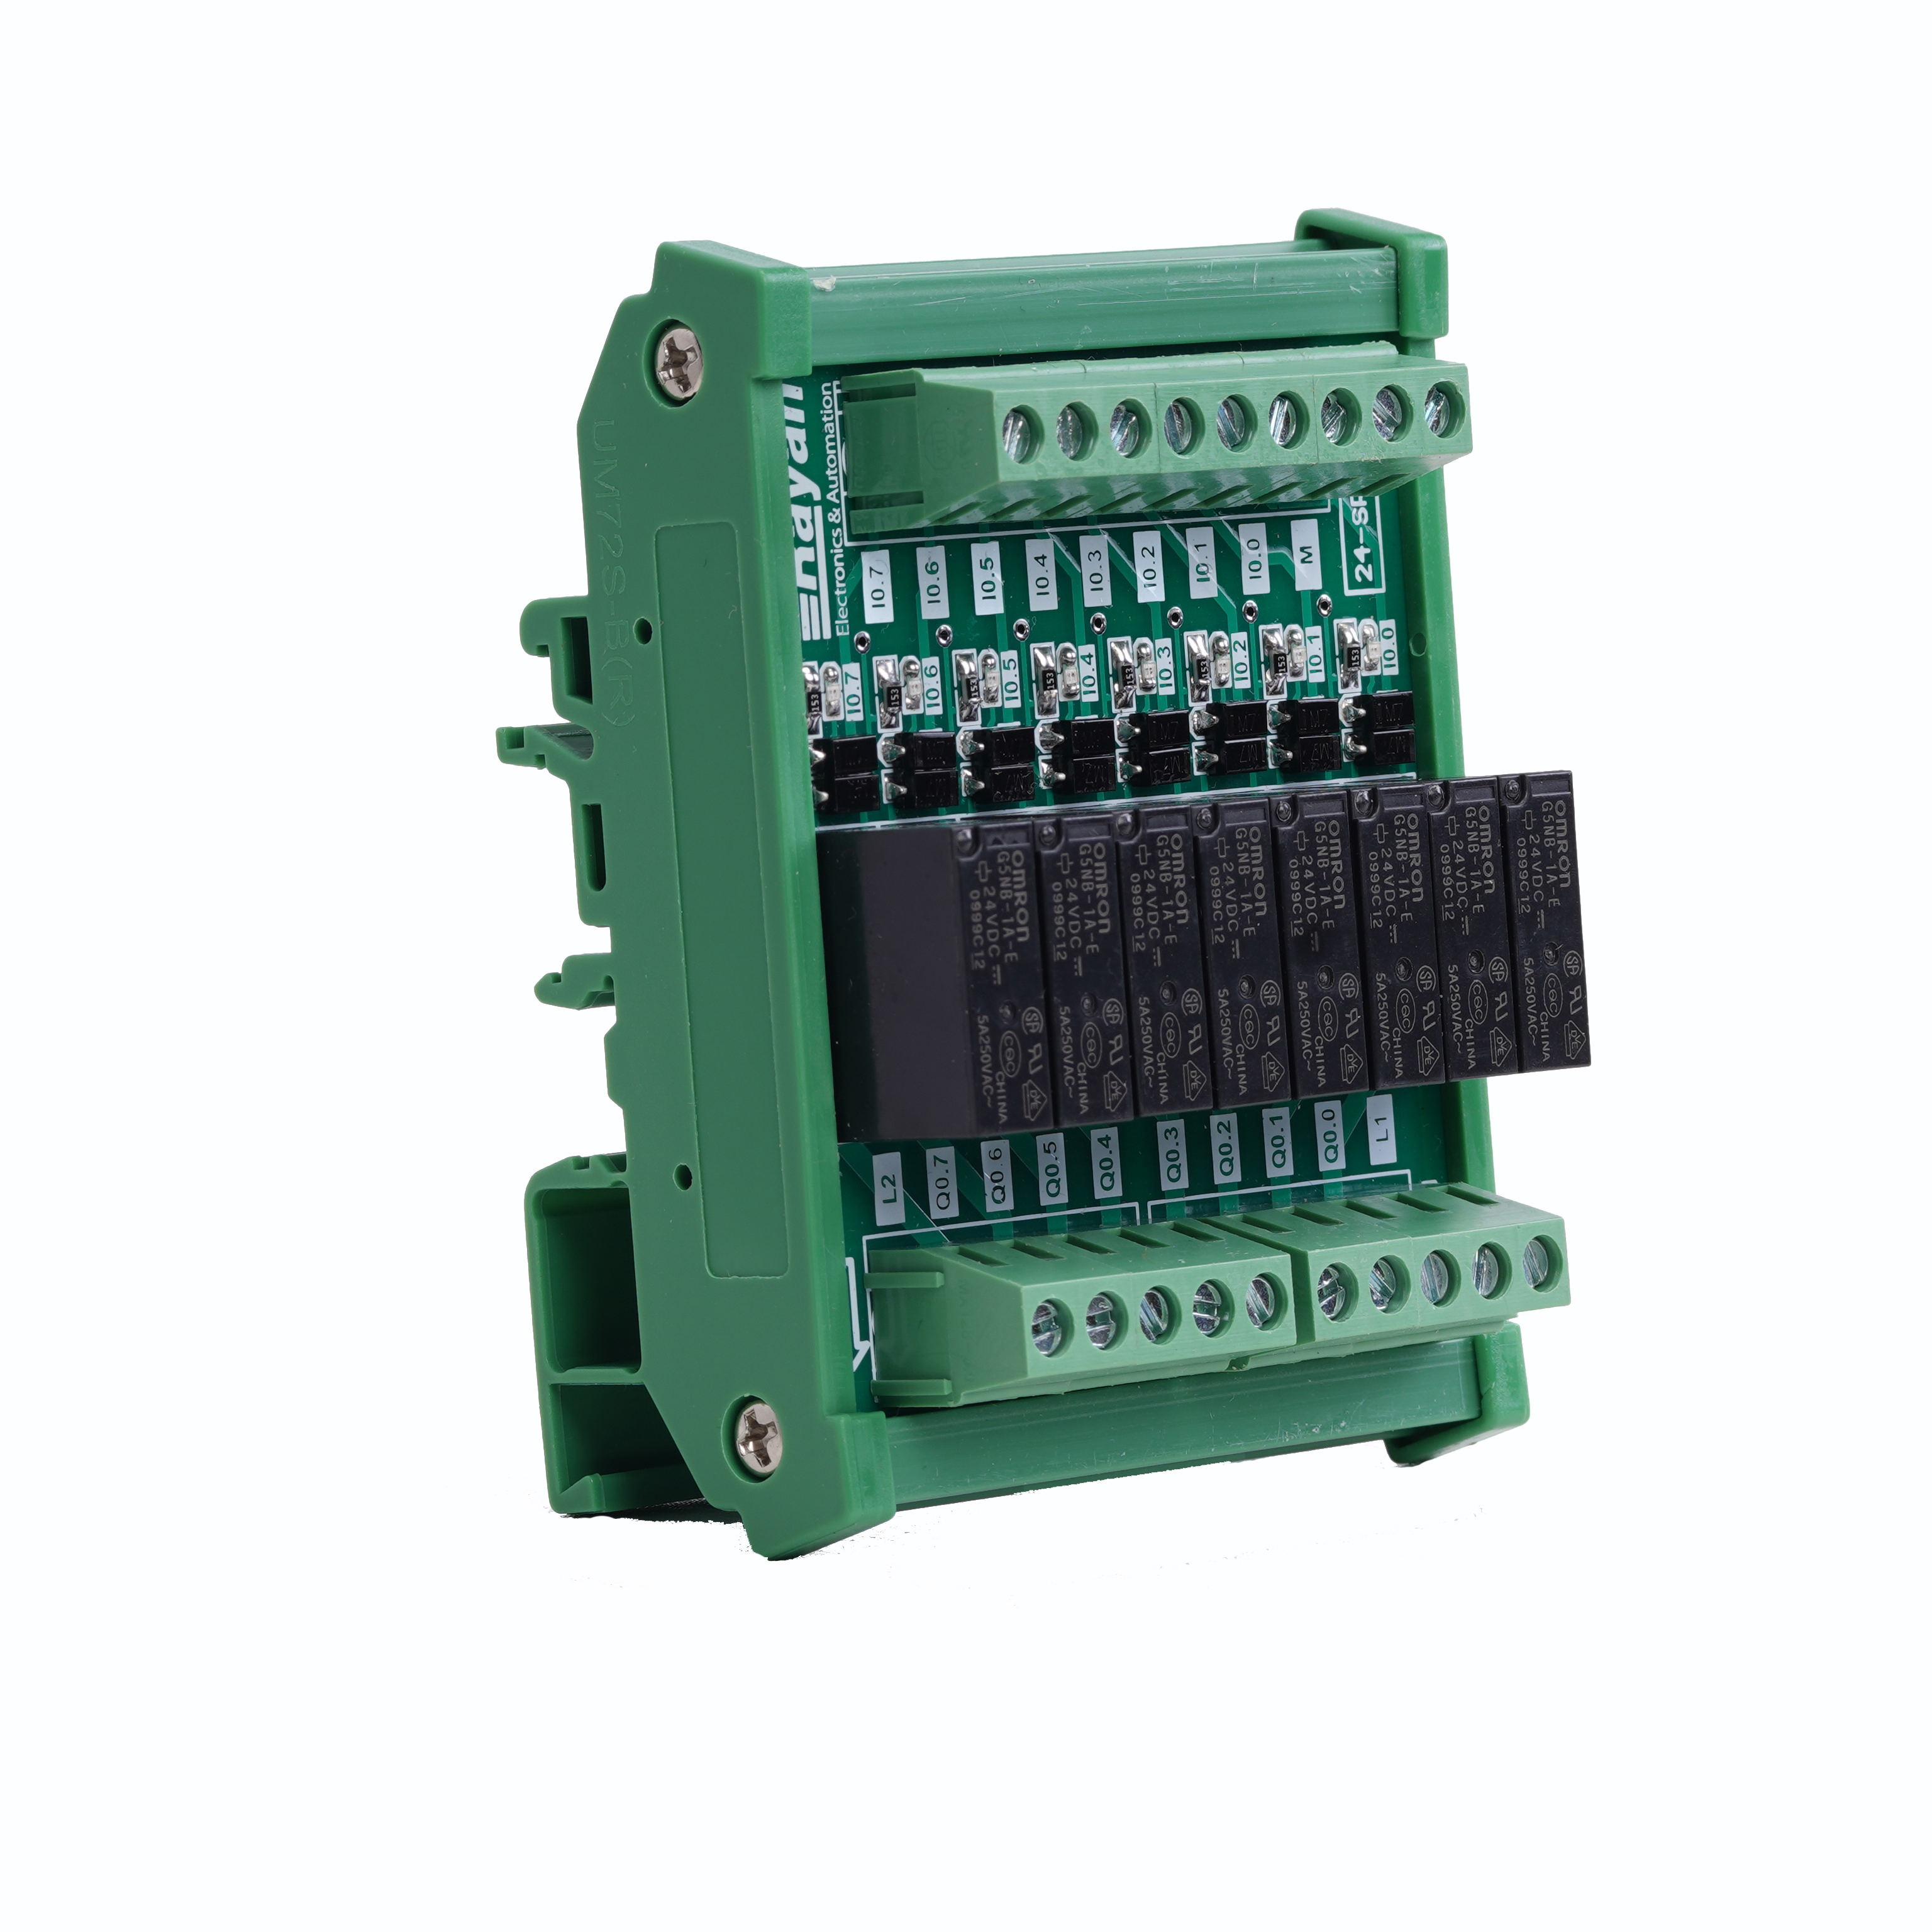 Rayan Single contact relay board 5A Model 24SRB-8-R0